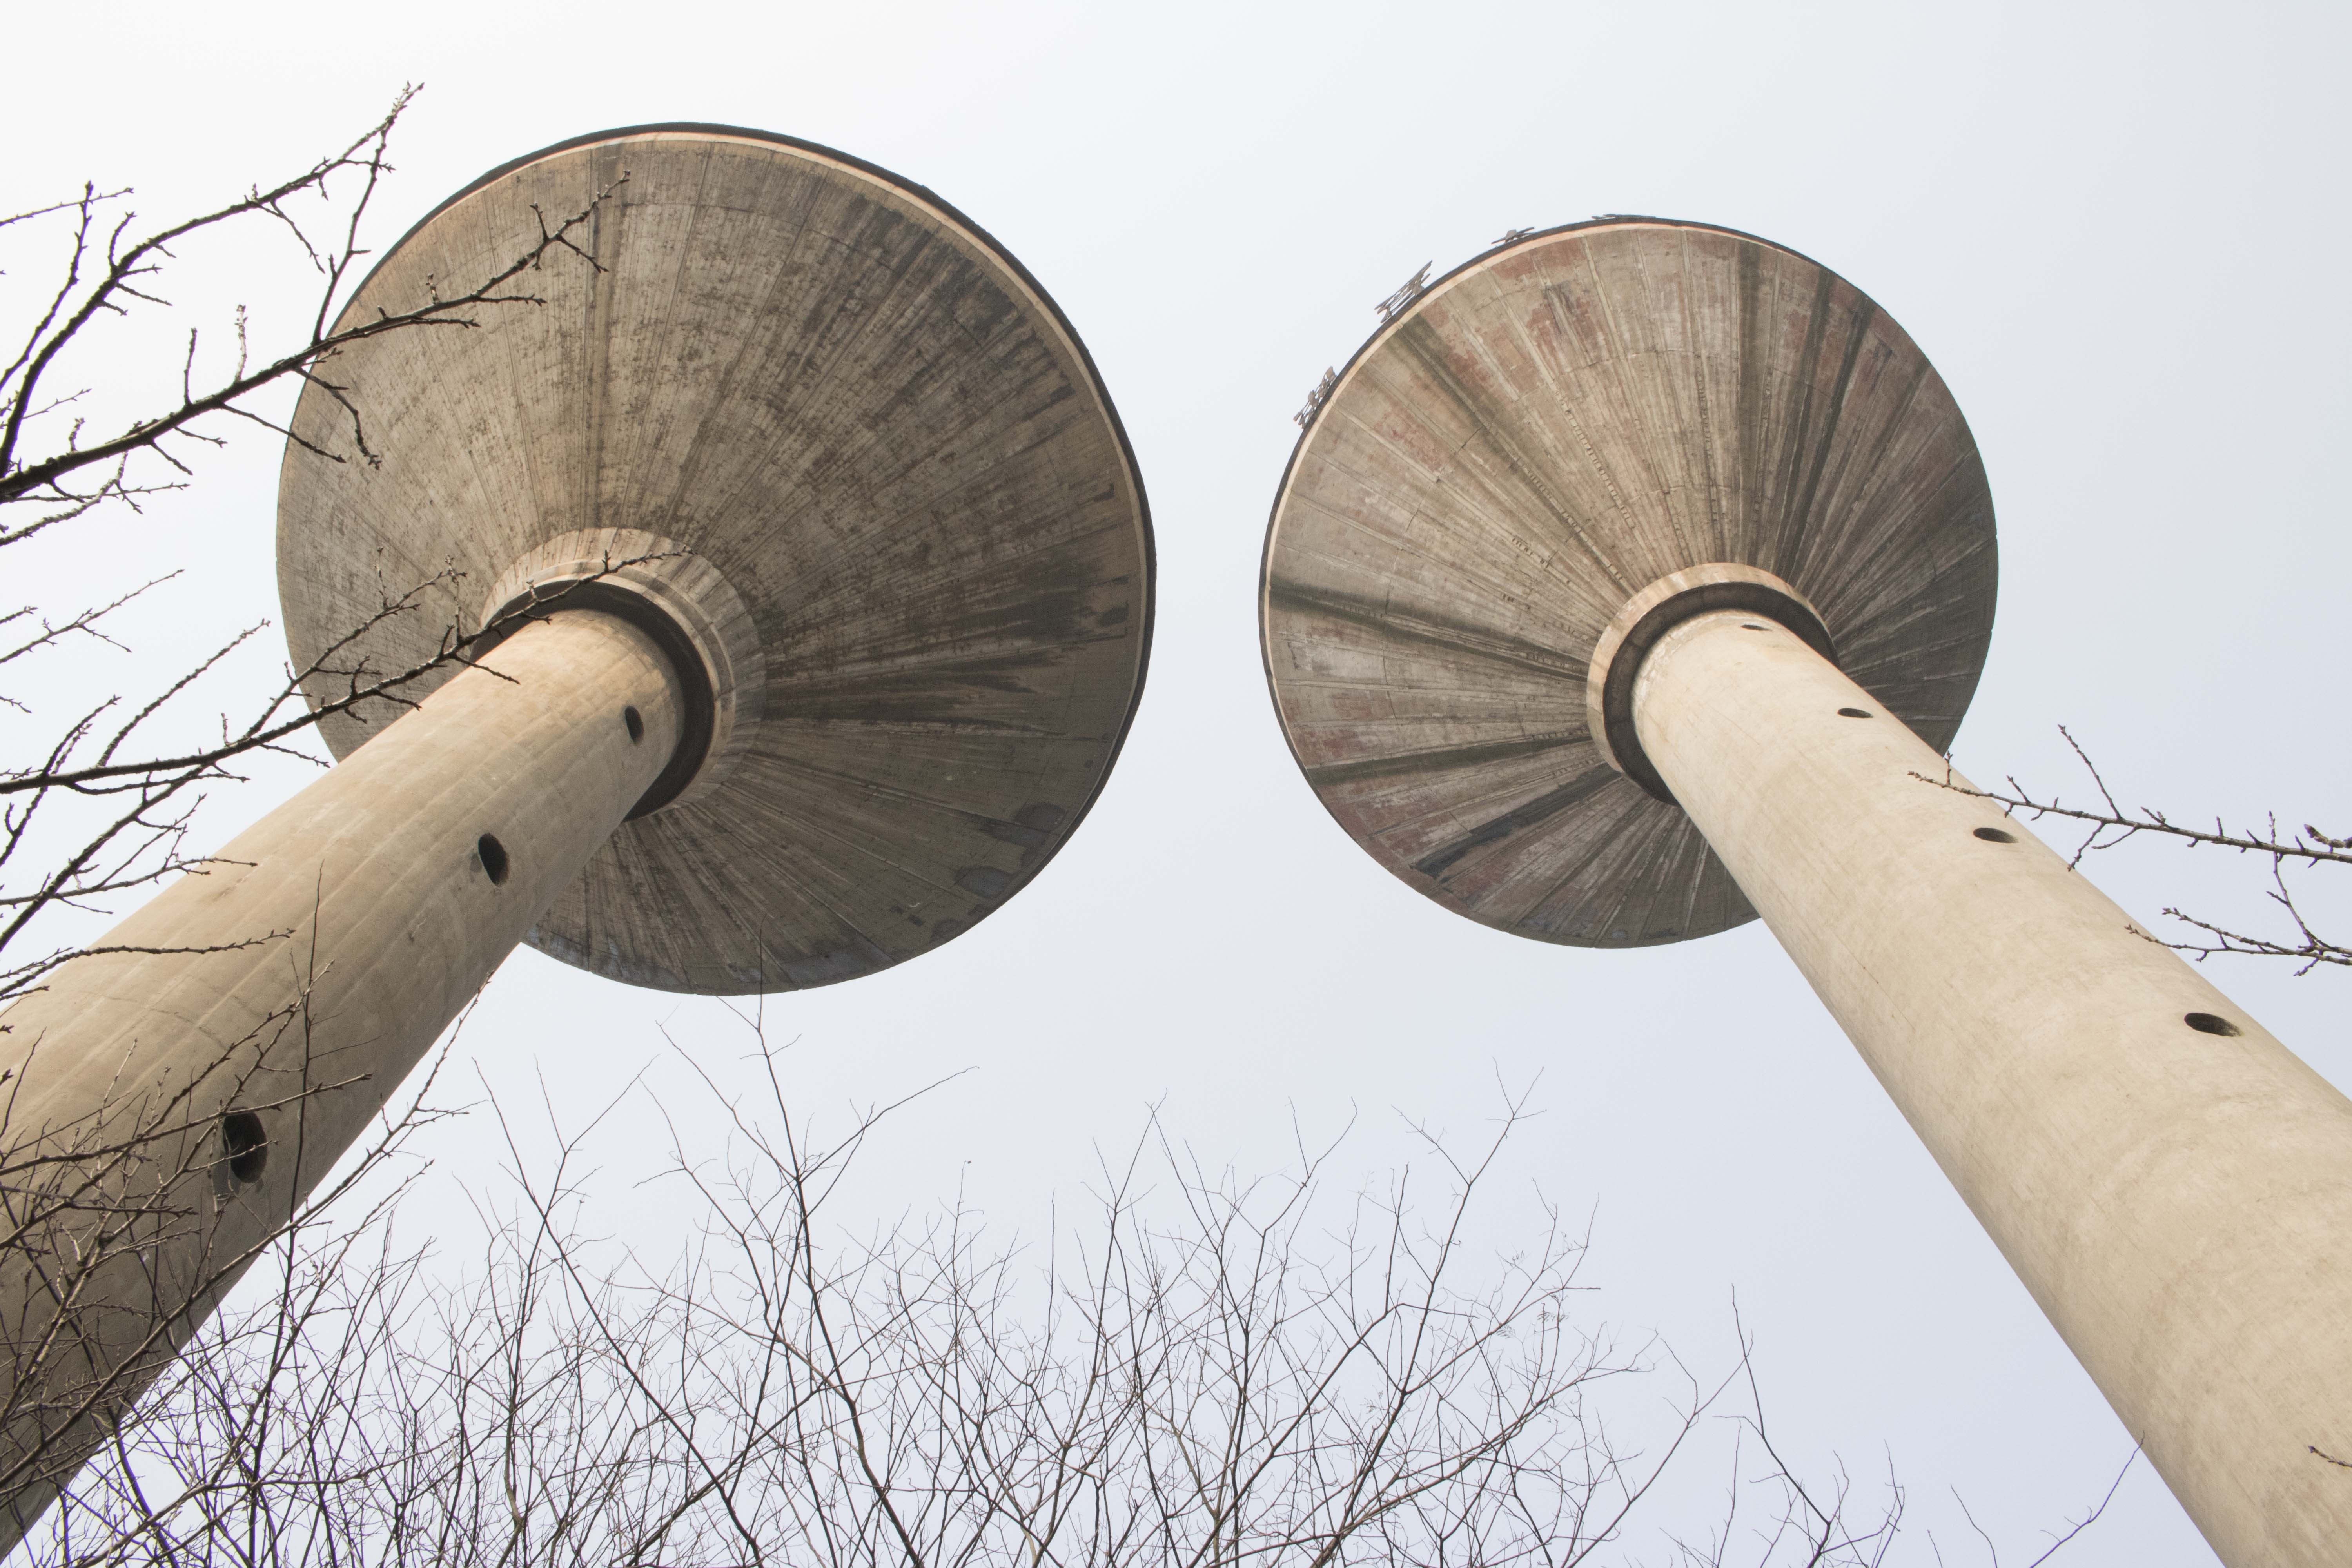 2 gray concrete towers